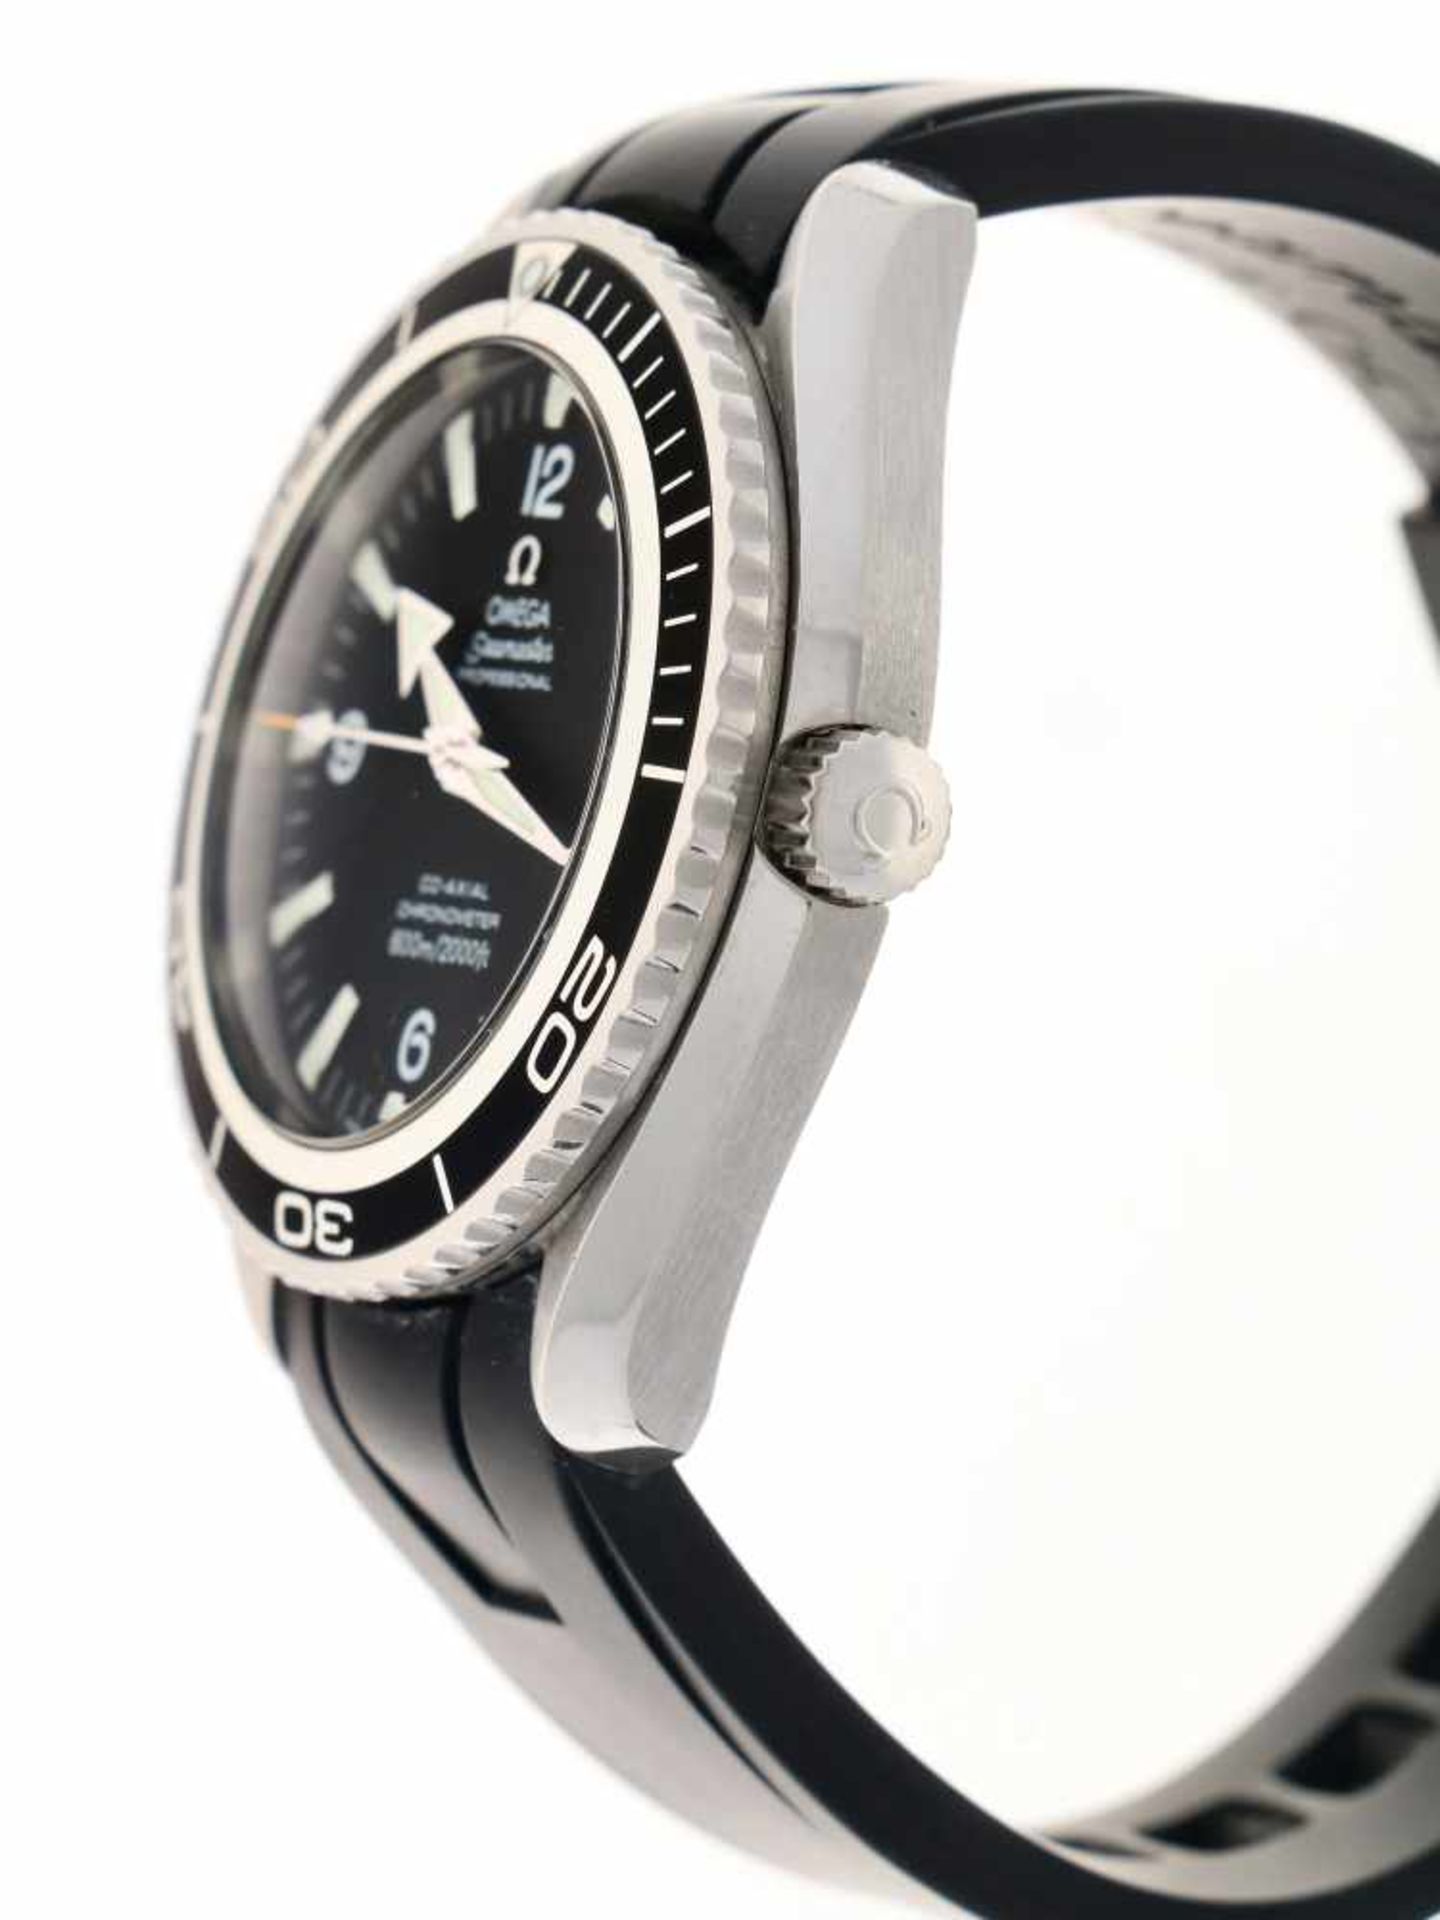 Omega Seamaster Planet Ocean 29005091 - Men's watch - Automatic - Ca. 2008. - Bild 5 aus 6